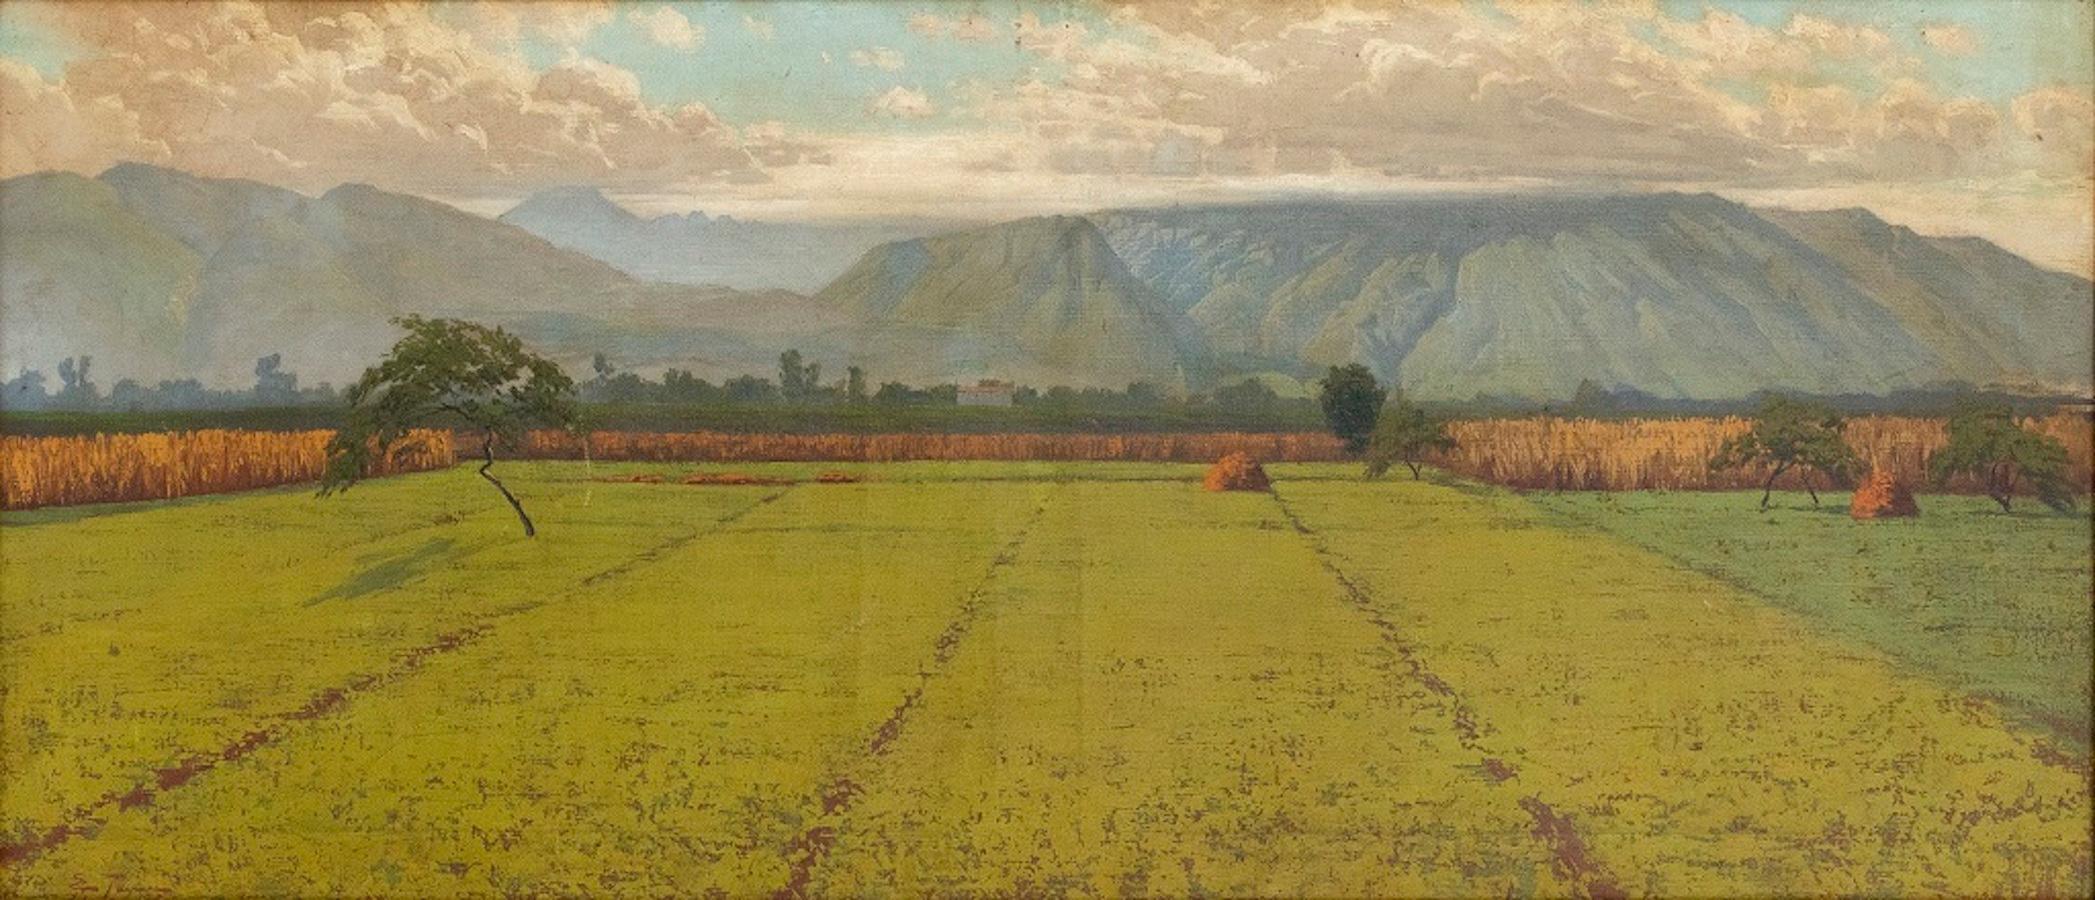 Edoardo Tani Figurative Painting - Highlands of Arcinazzo - Oil on Canvas by E. Tani - 1920s